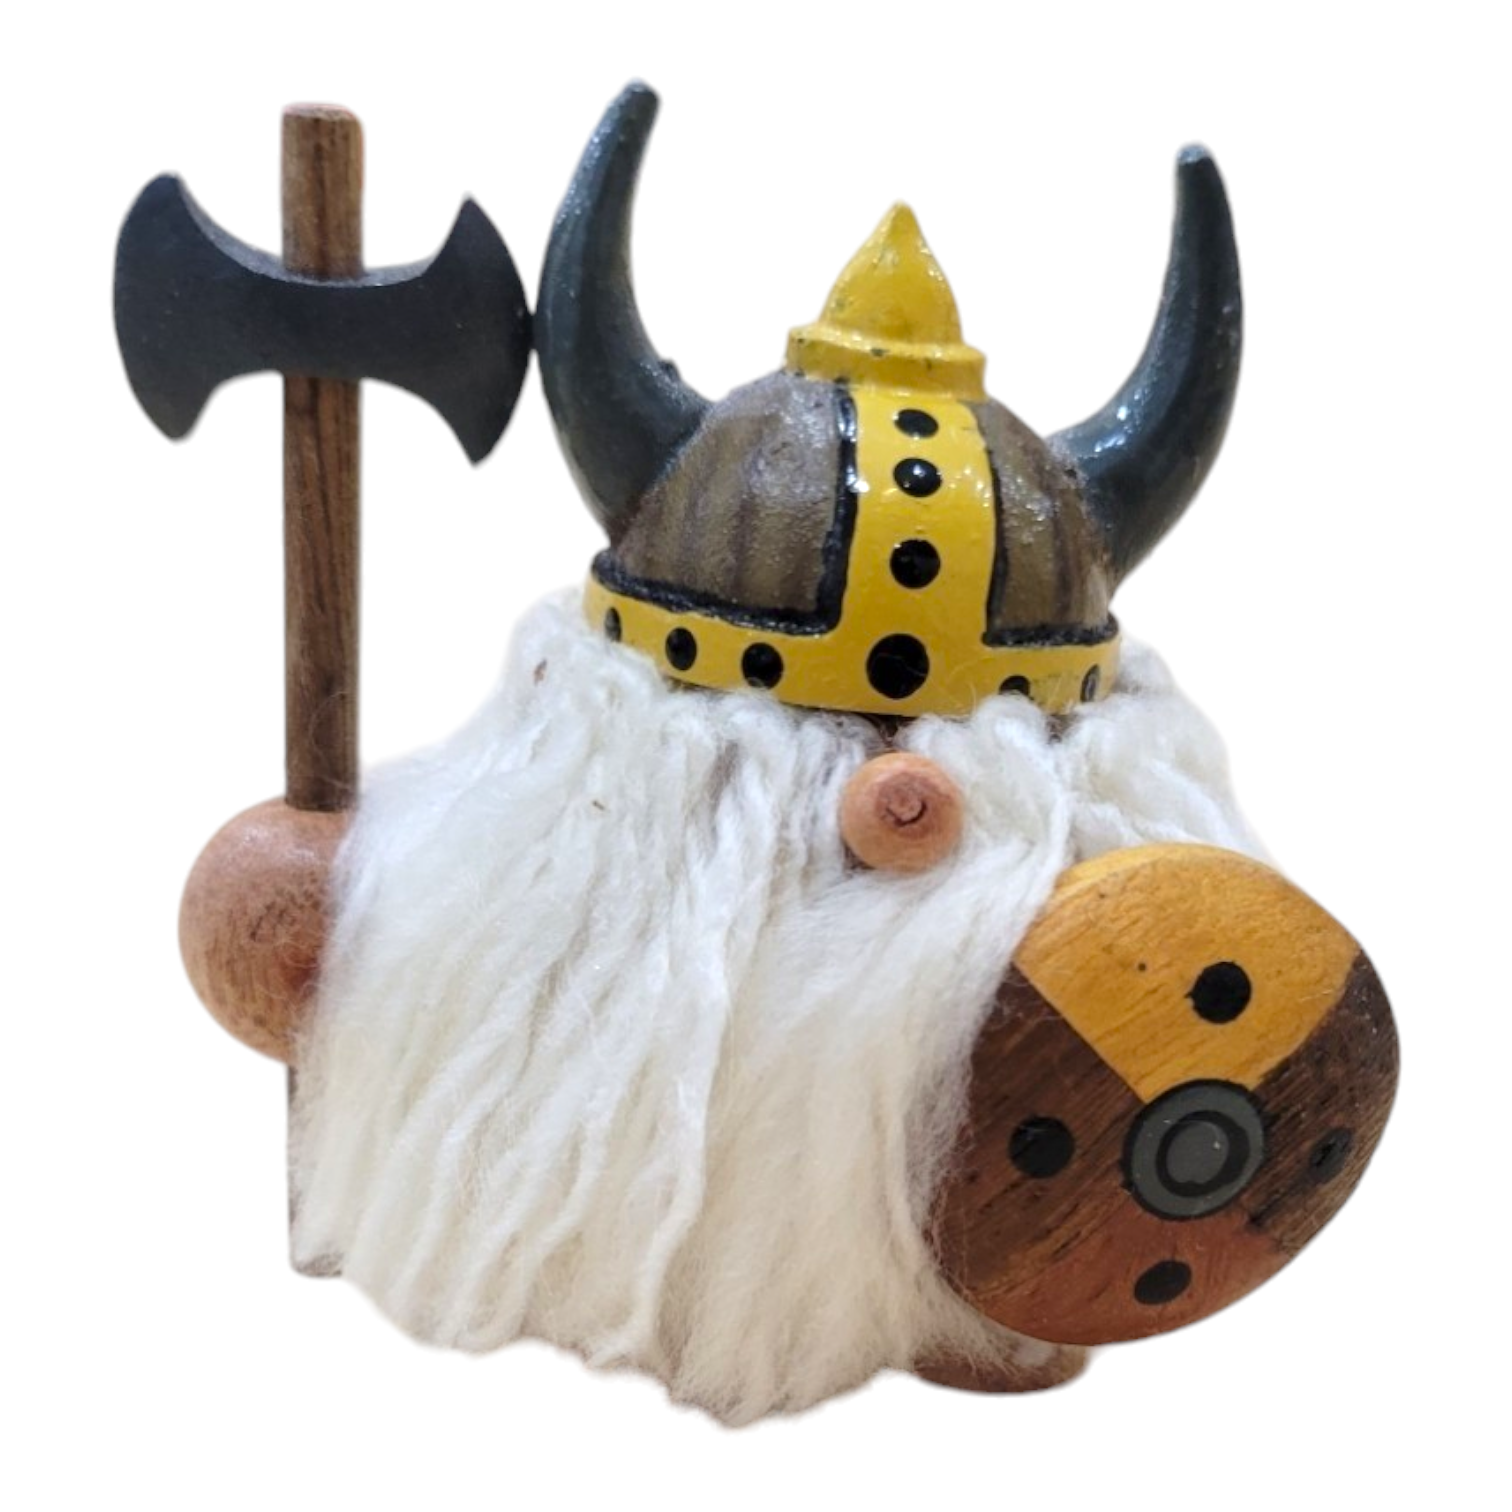 Figurine: Viking with Axe & Shield (2.75")